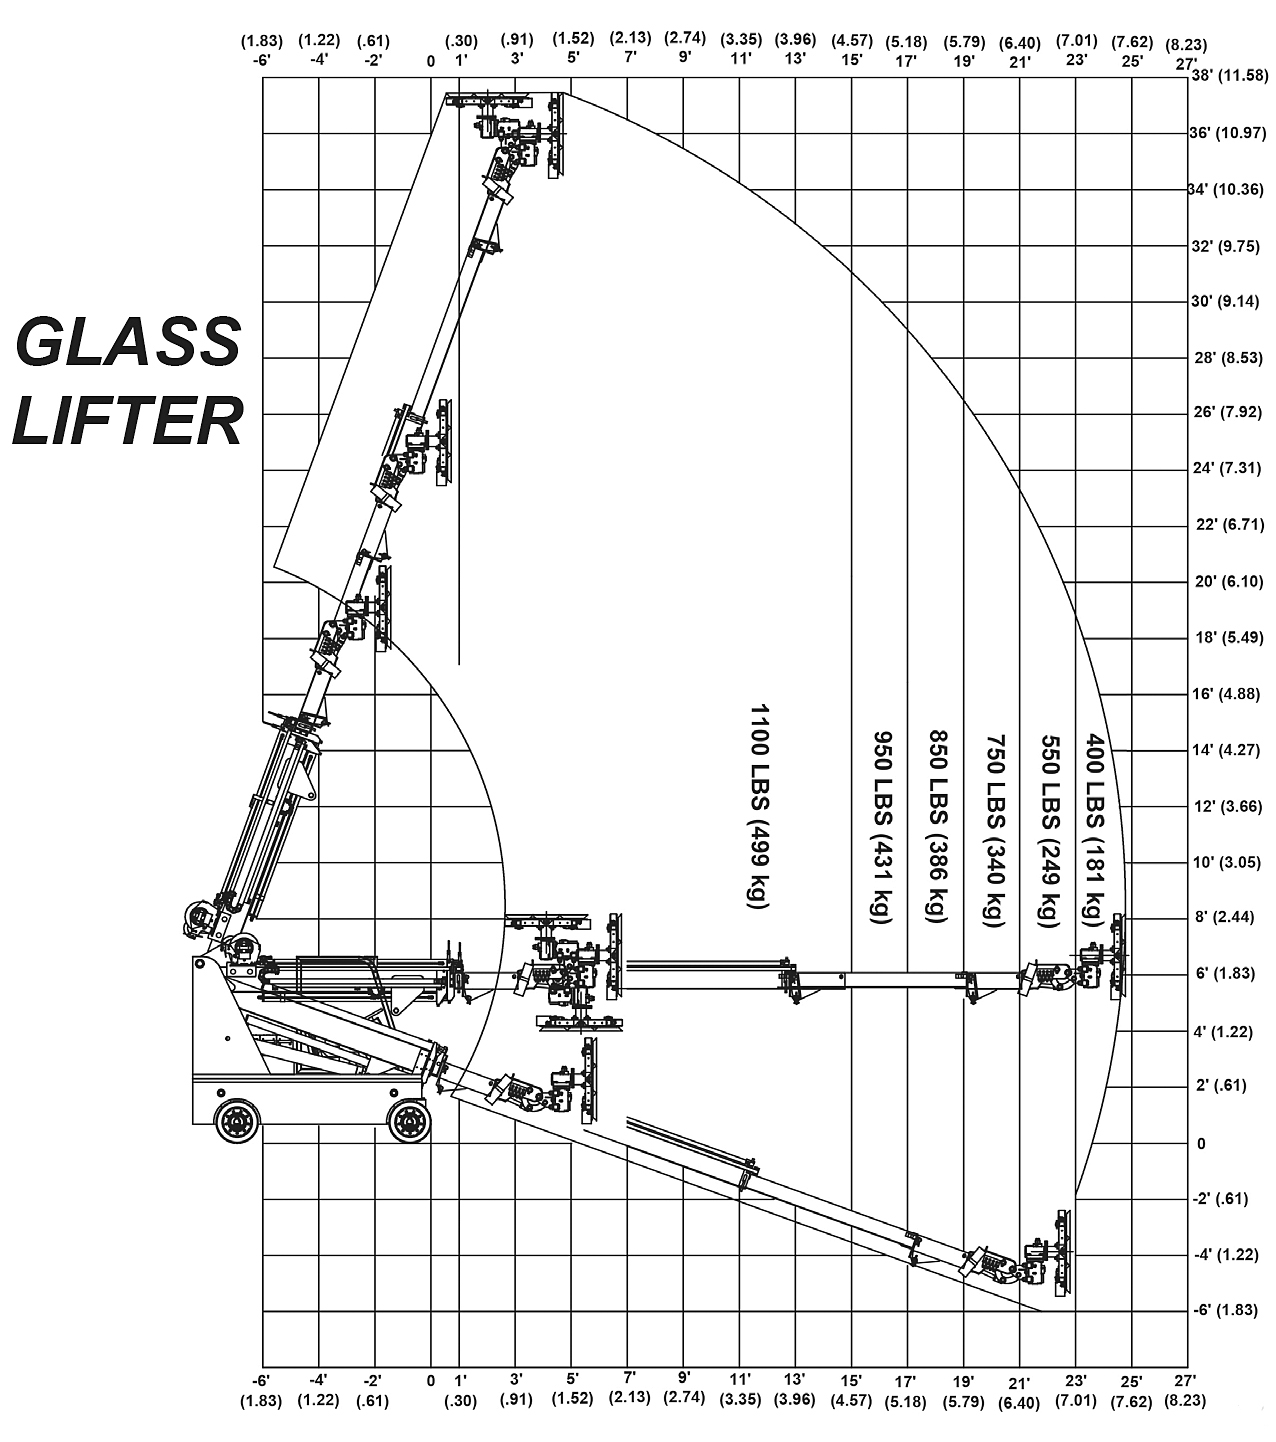 Brandon 10 Glass Lifter Load Capacity